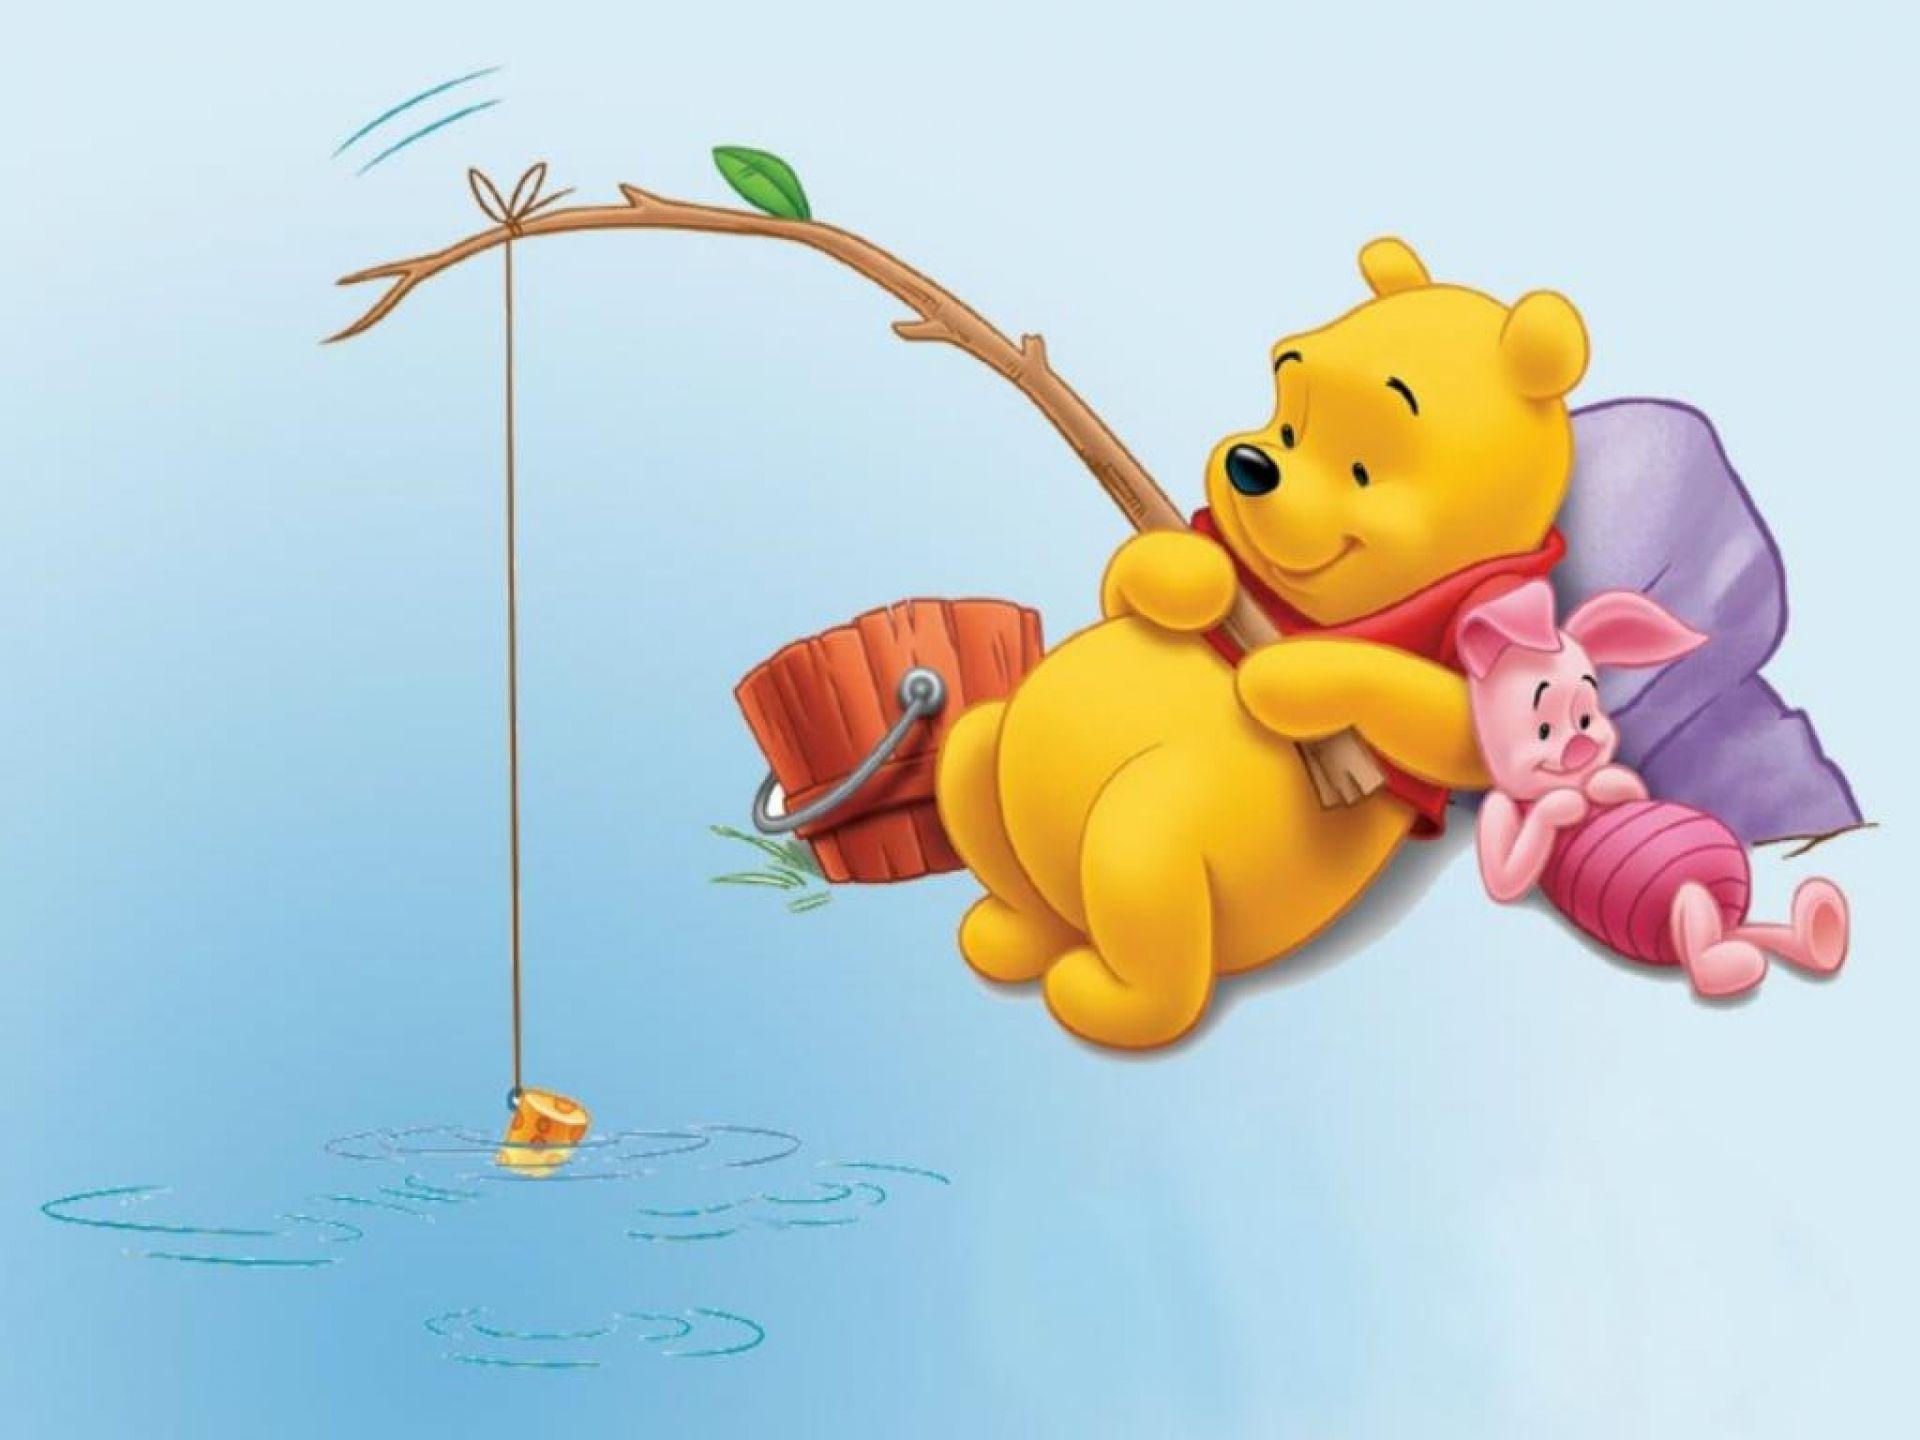 Winnie the Pooh Disney Full HD Wallpaper Image for Phone